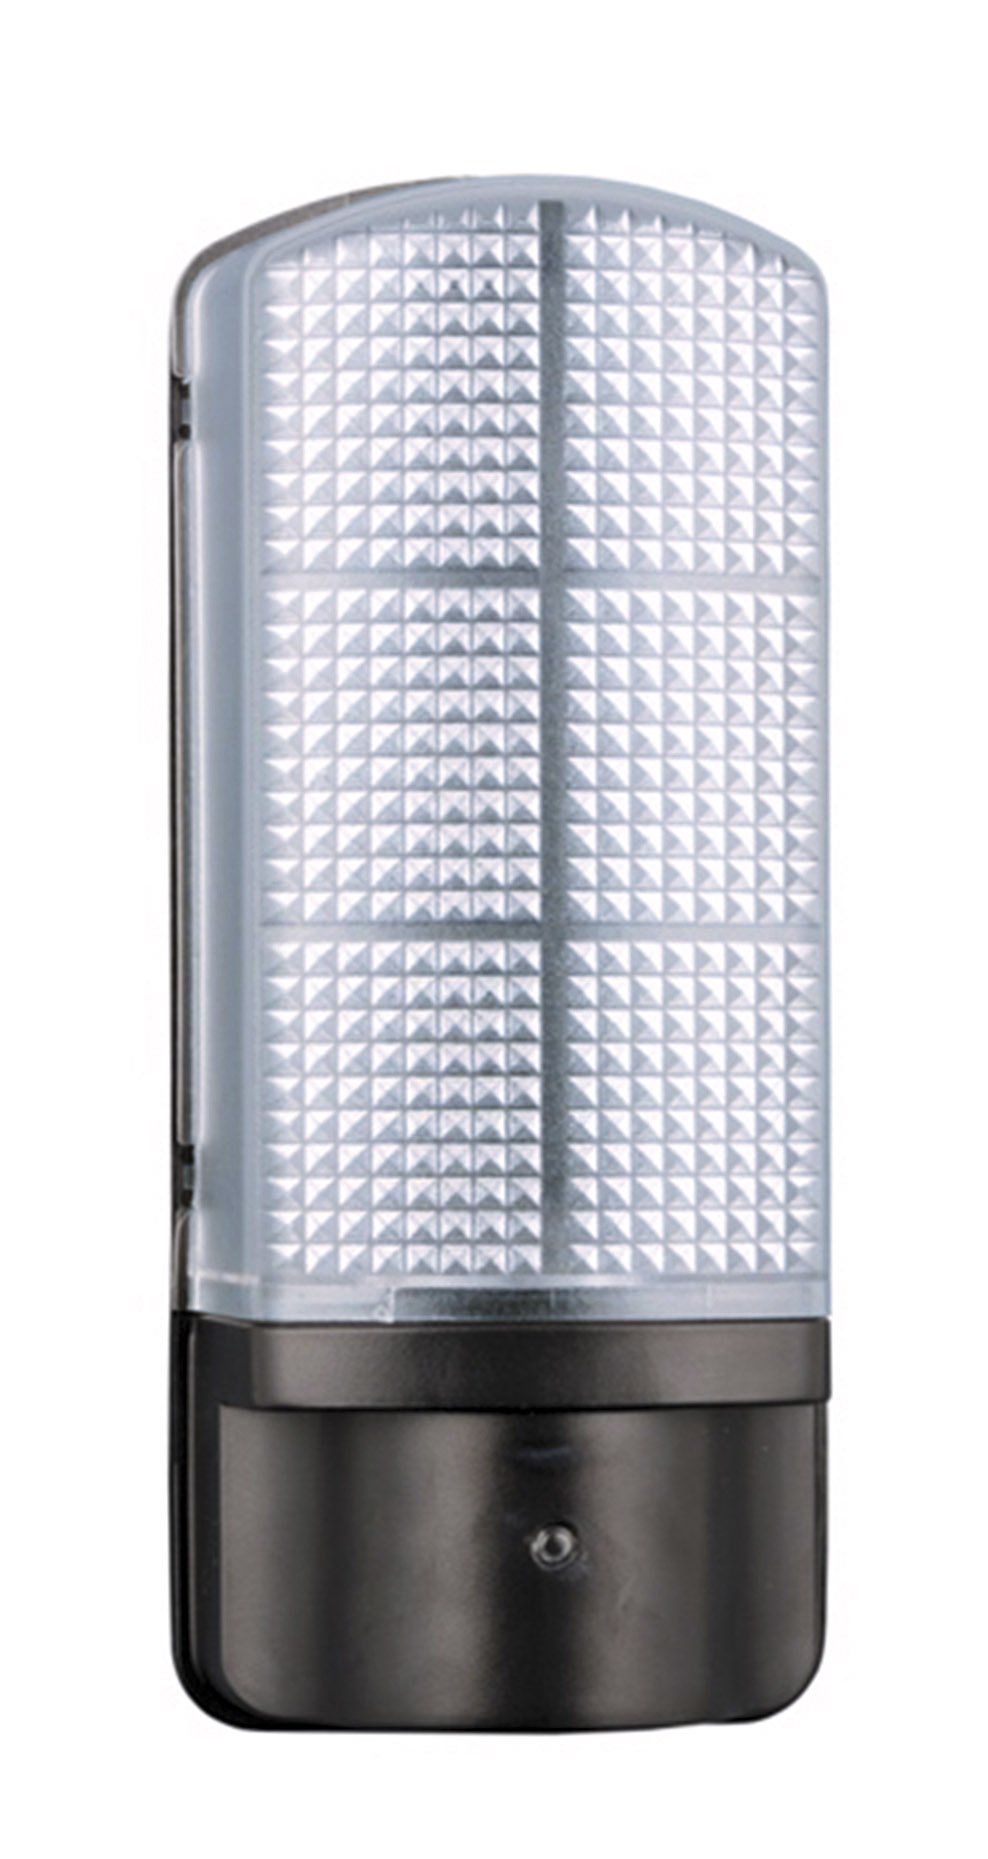 LED exterior photocell wall light